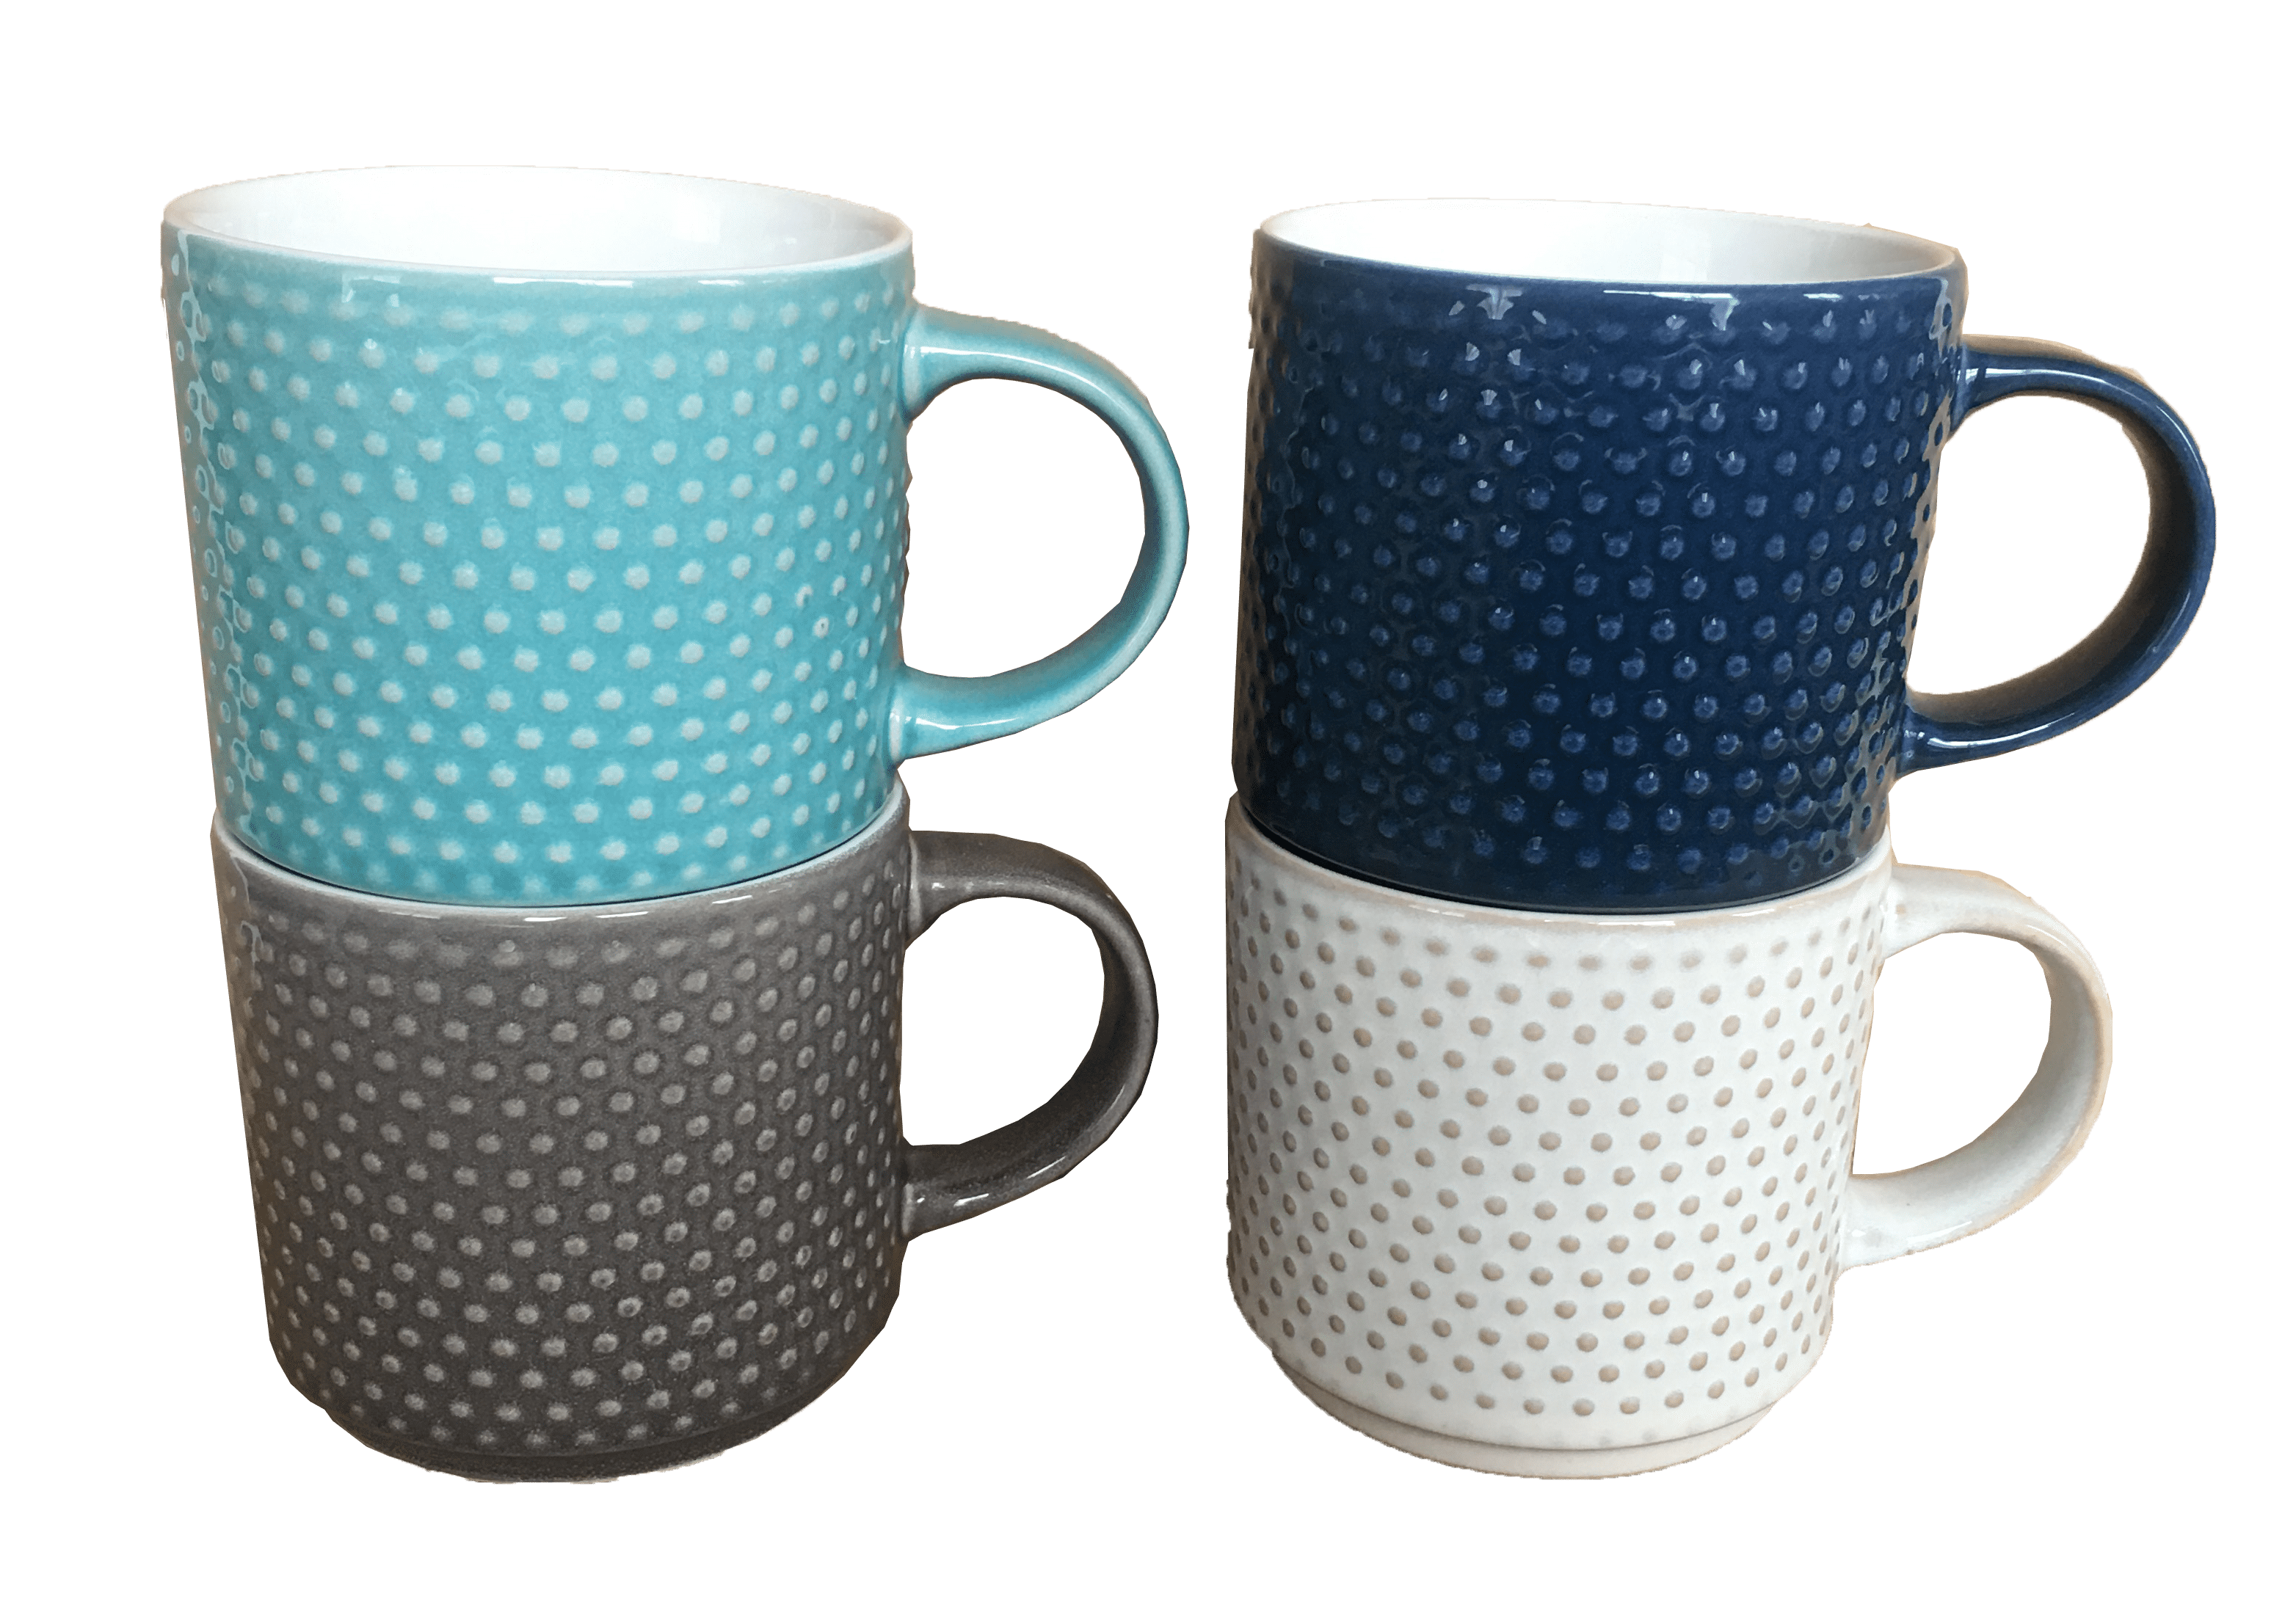 MVSR Coffee Mug Set Tea Cup Handbag Styling Ceramic